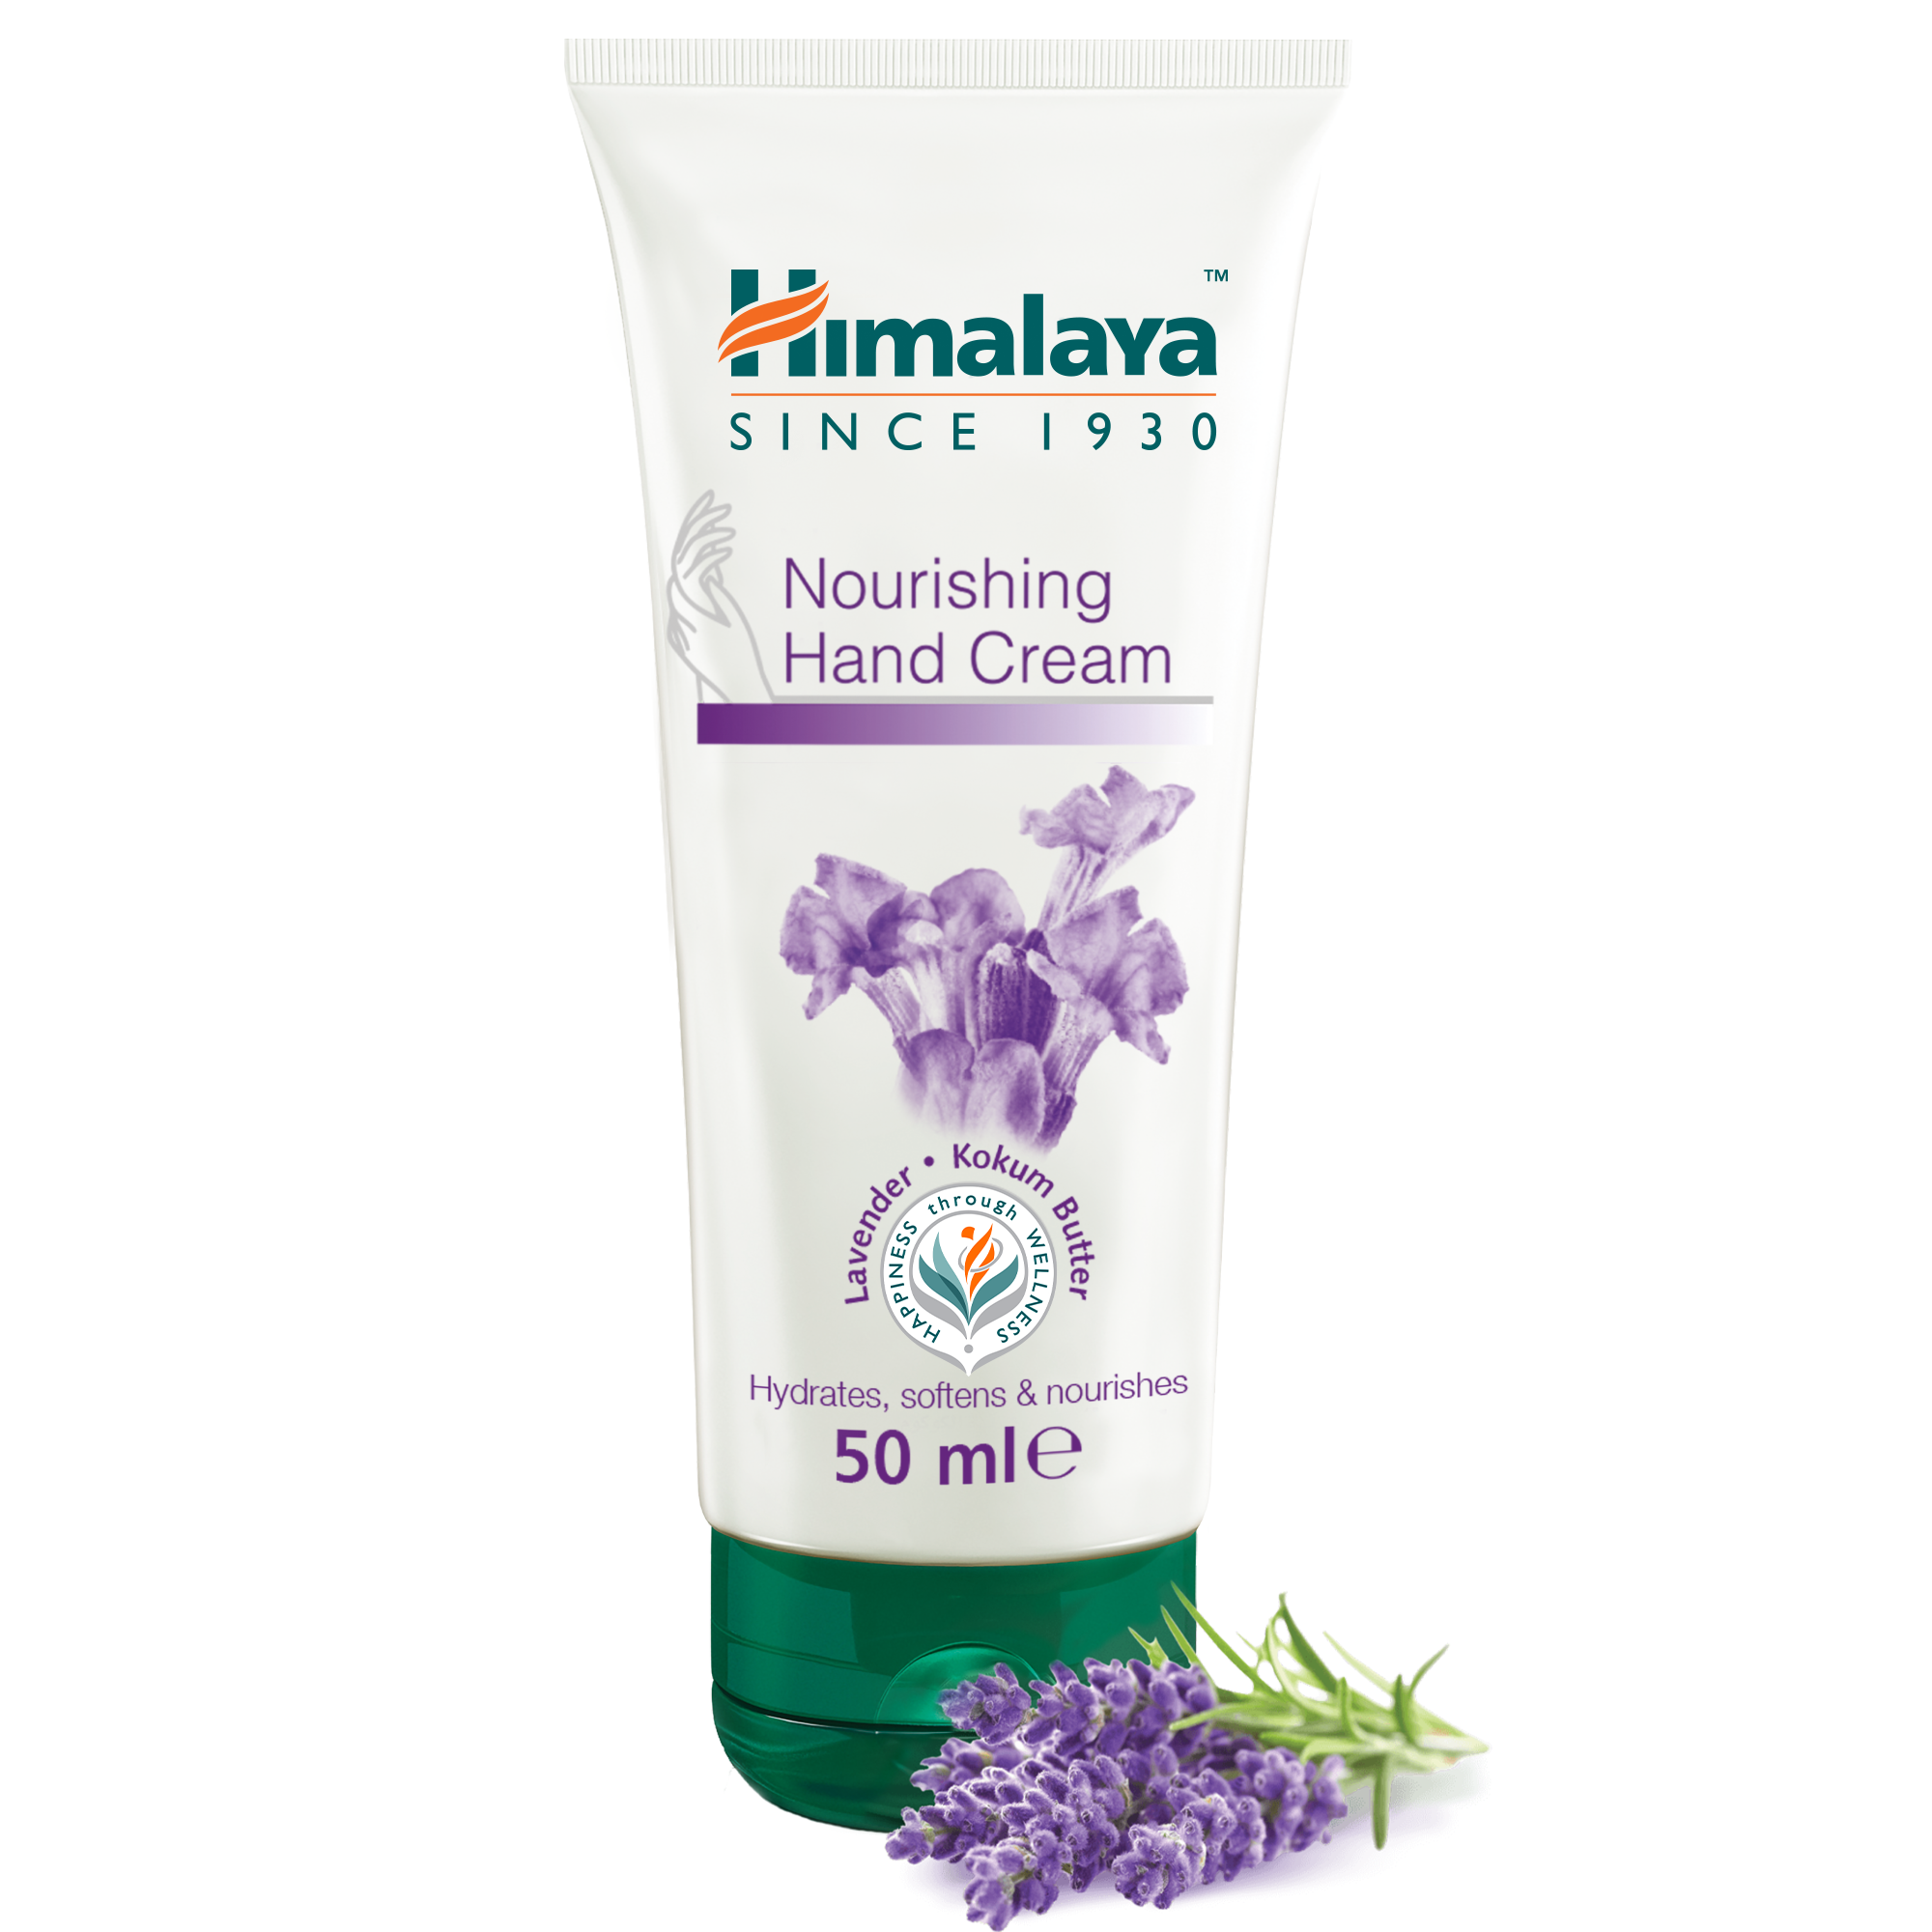 Himalaya Nourishing Hand Cream 50ml - Provides Essential Nourishment